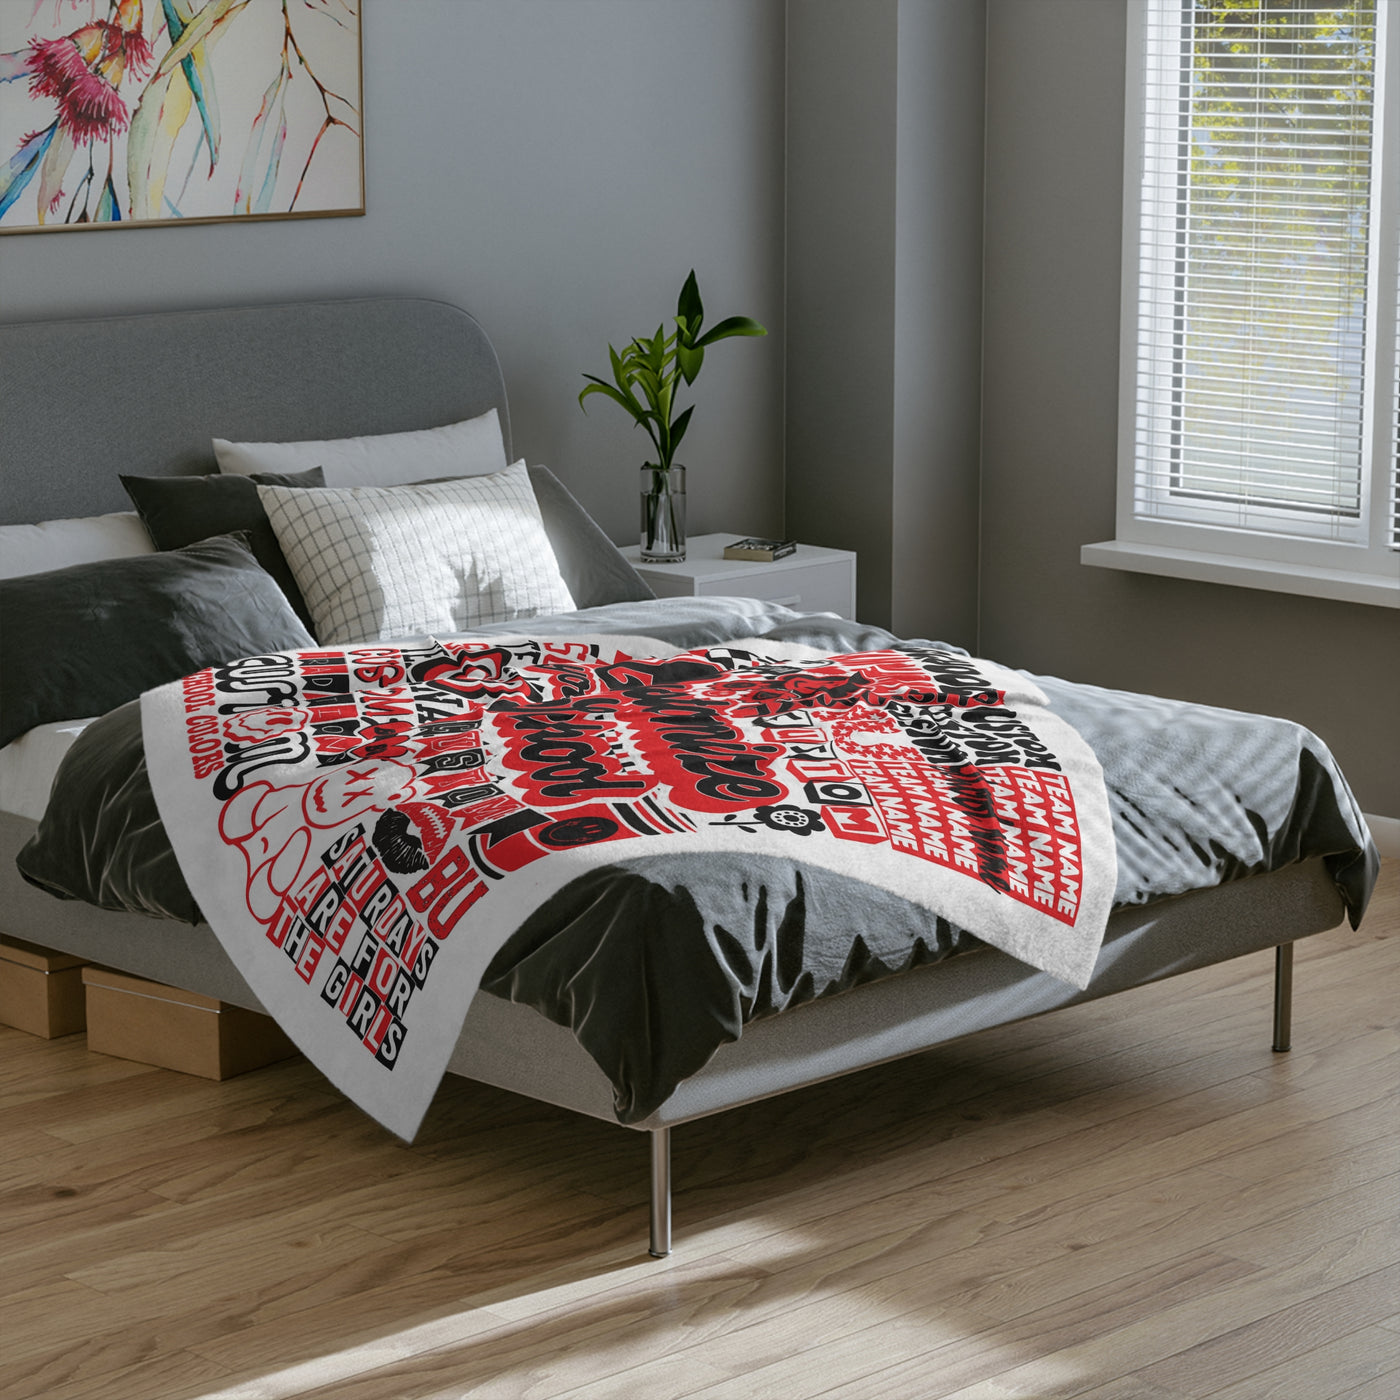 Customize Your Own 50x60 Y2K Dorm Room Blanket